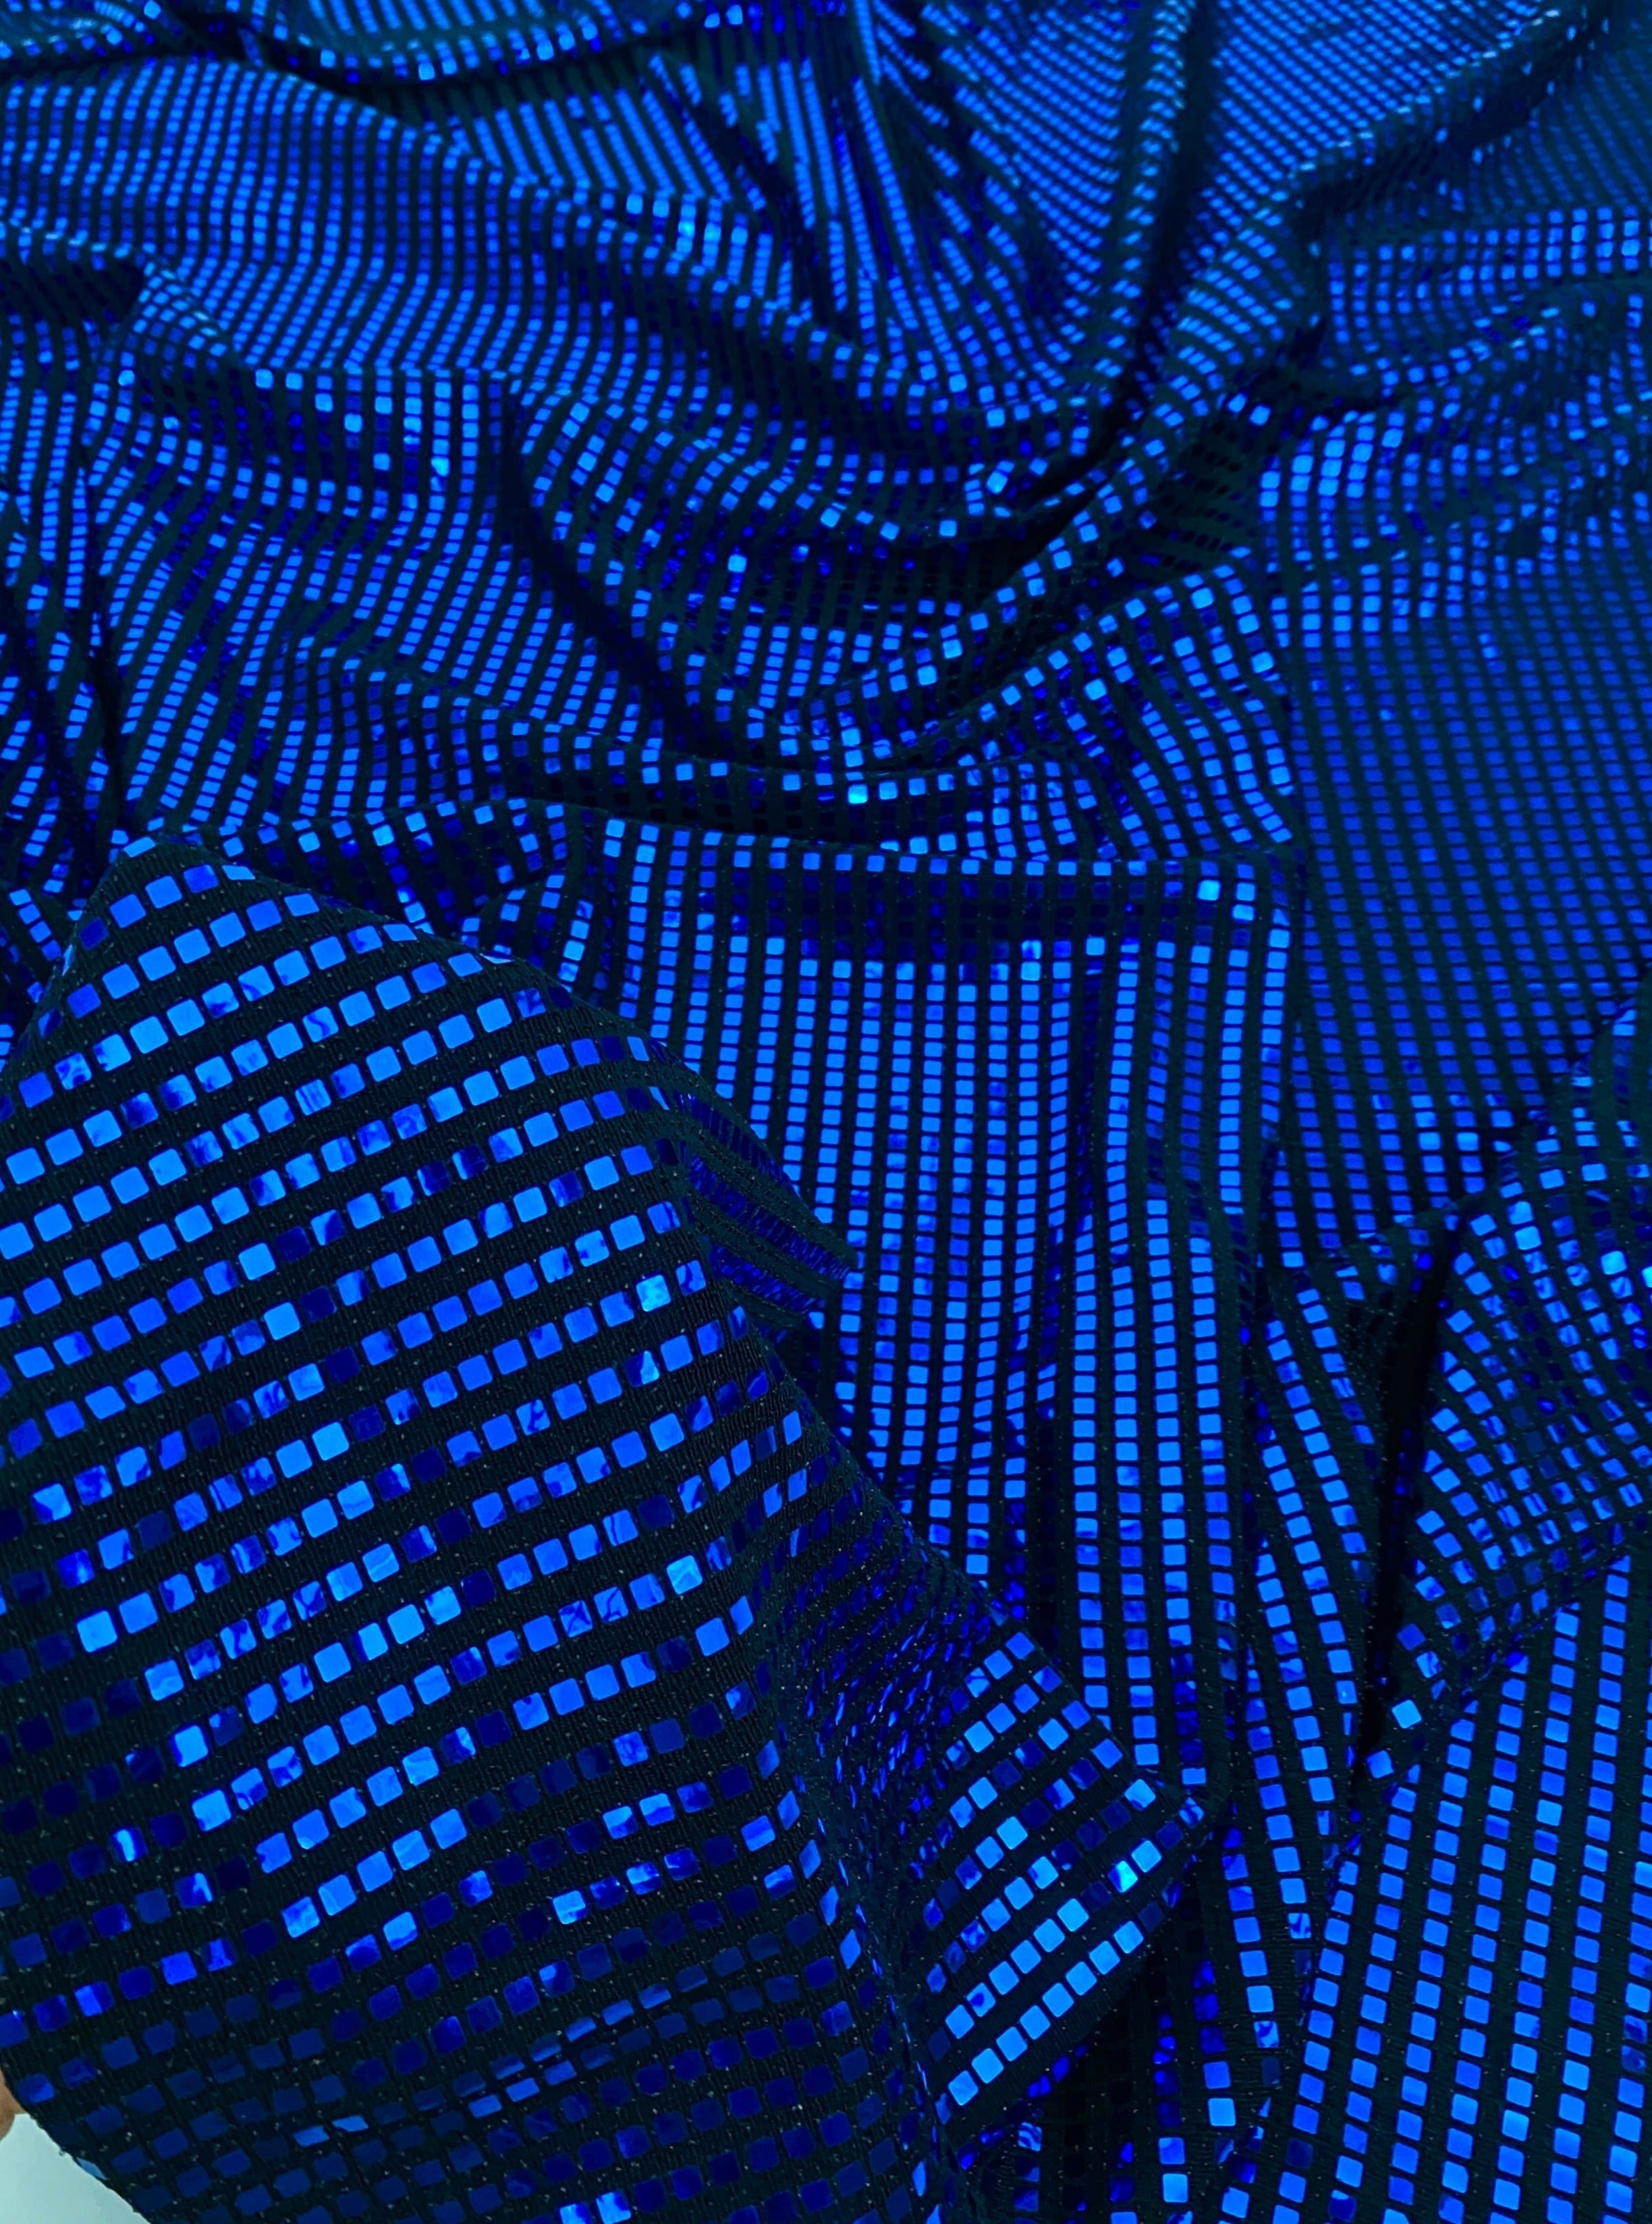 royal blue flat mirror spandex, royal blue foiled sequin fabric, royal blue flat sequin spandex metallic fabric, blue sequin spandex, light blue mirror foiled sequin spandex, dark blue mirror foiled sequin spandex, aqua blue mirror foiled sequin spandex, ocean blue mirror foiled sequin spandex, premium mirror foiled sequin spandex, mirror foiled sequin spandex for woman